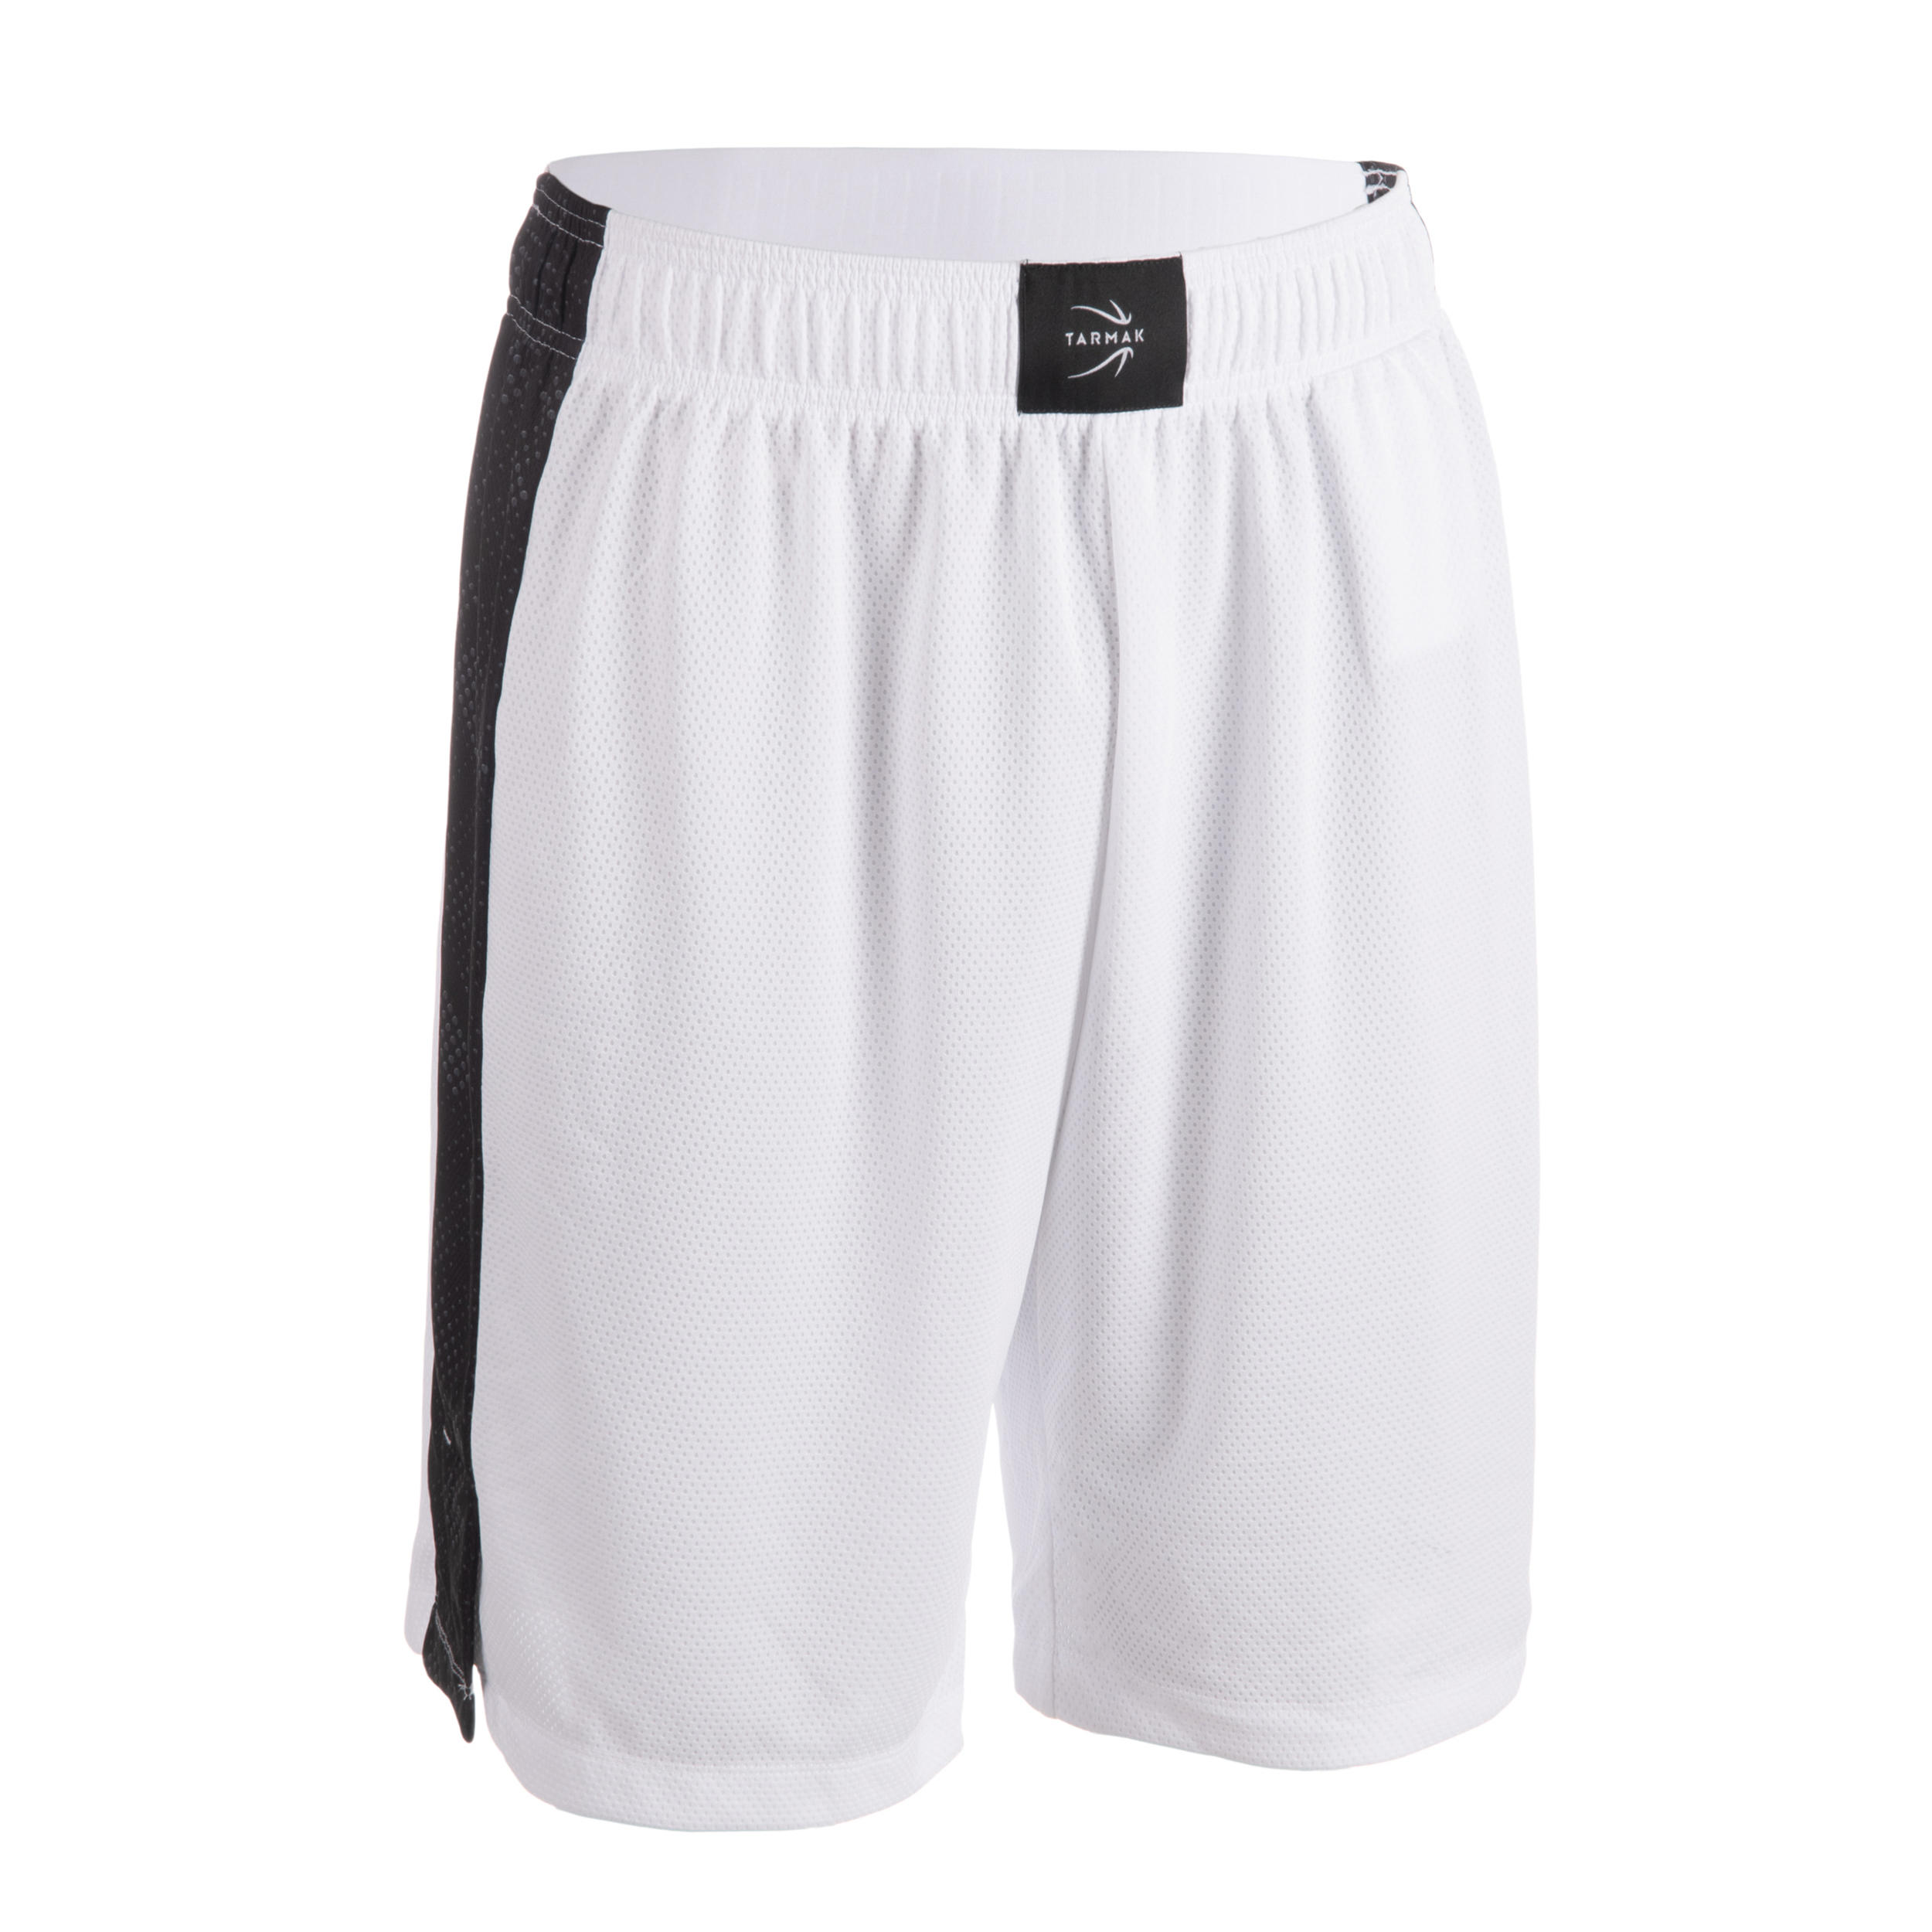 decathlon basketball shorts